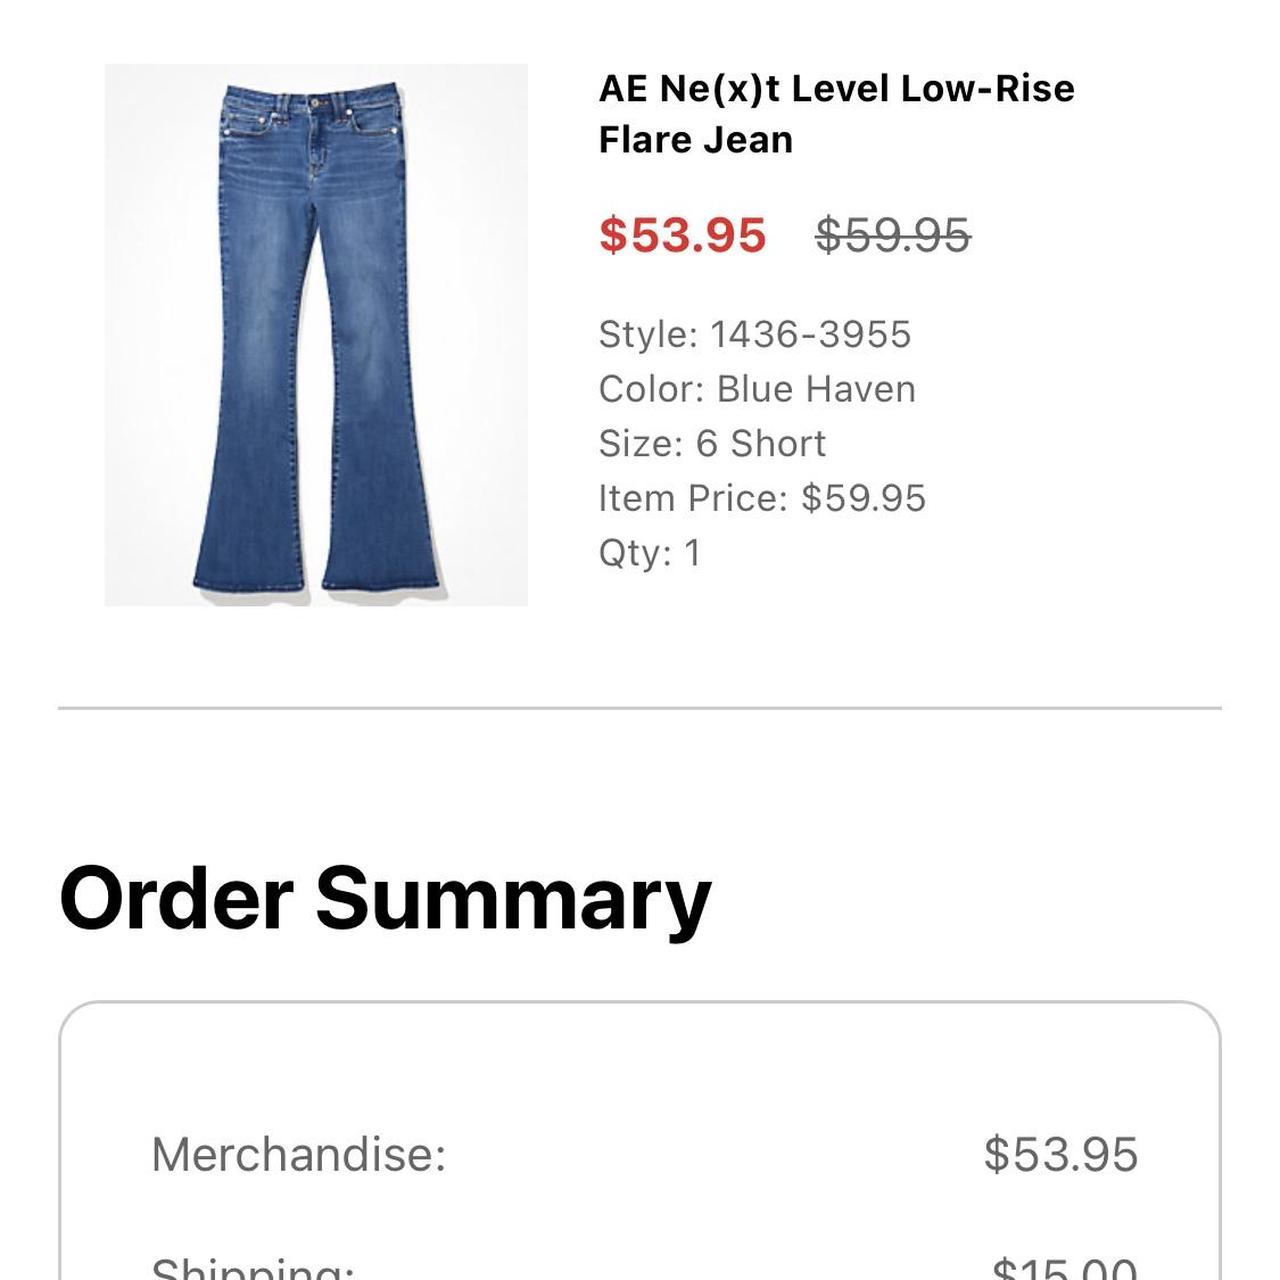 AE Ne(x)t Level Low-Rise Flare Jean